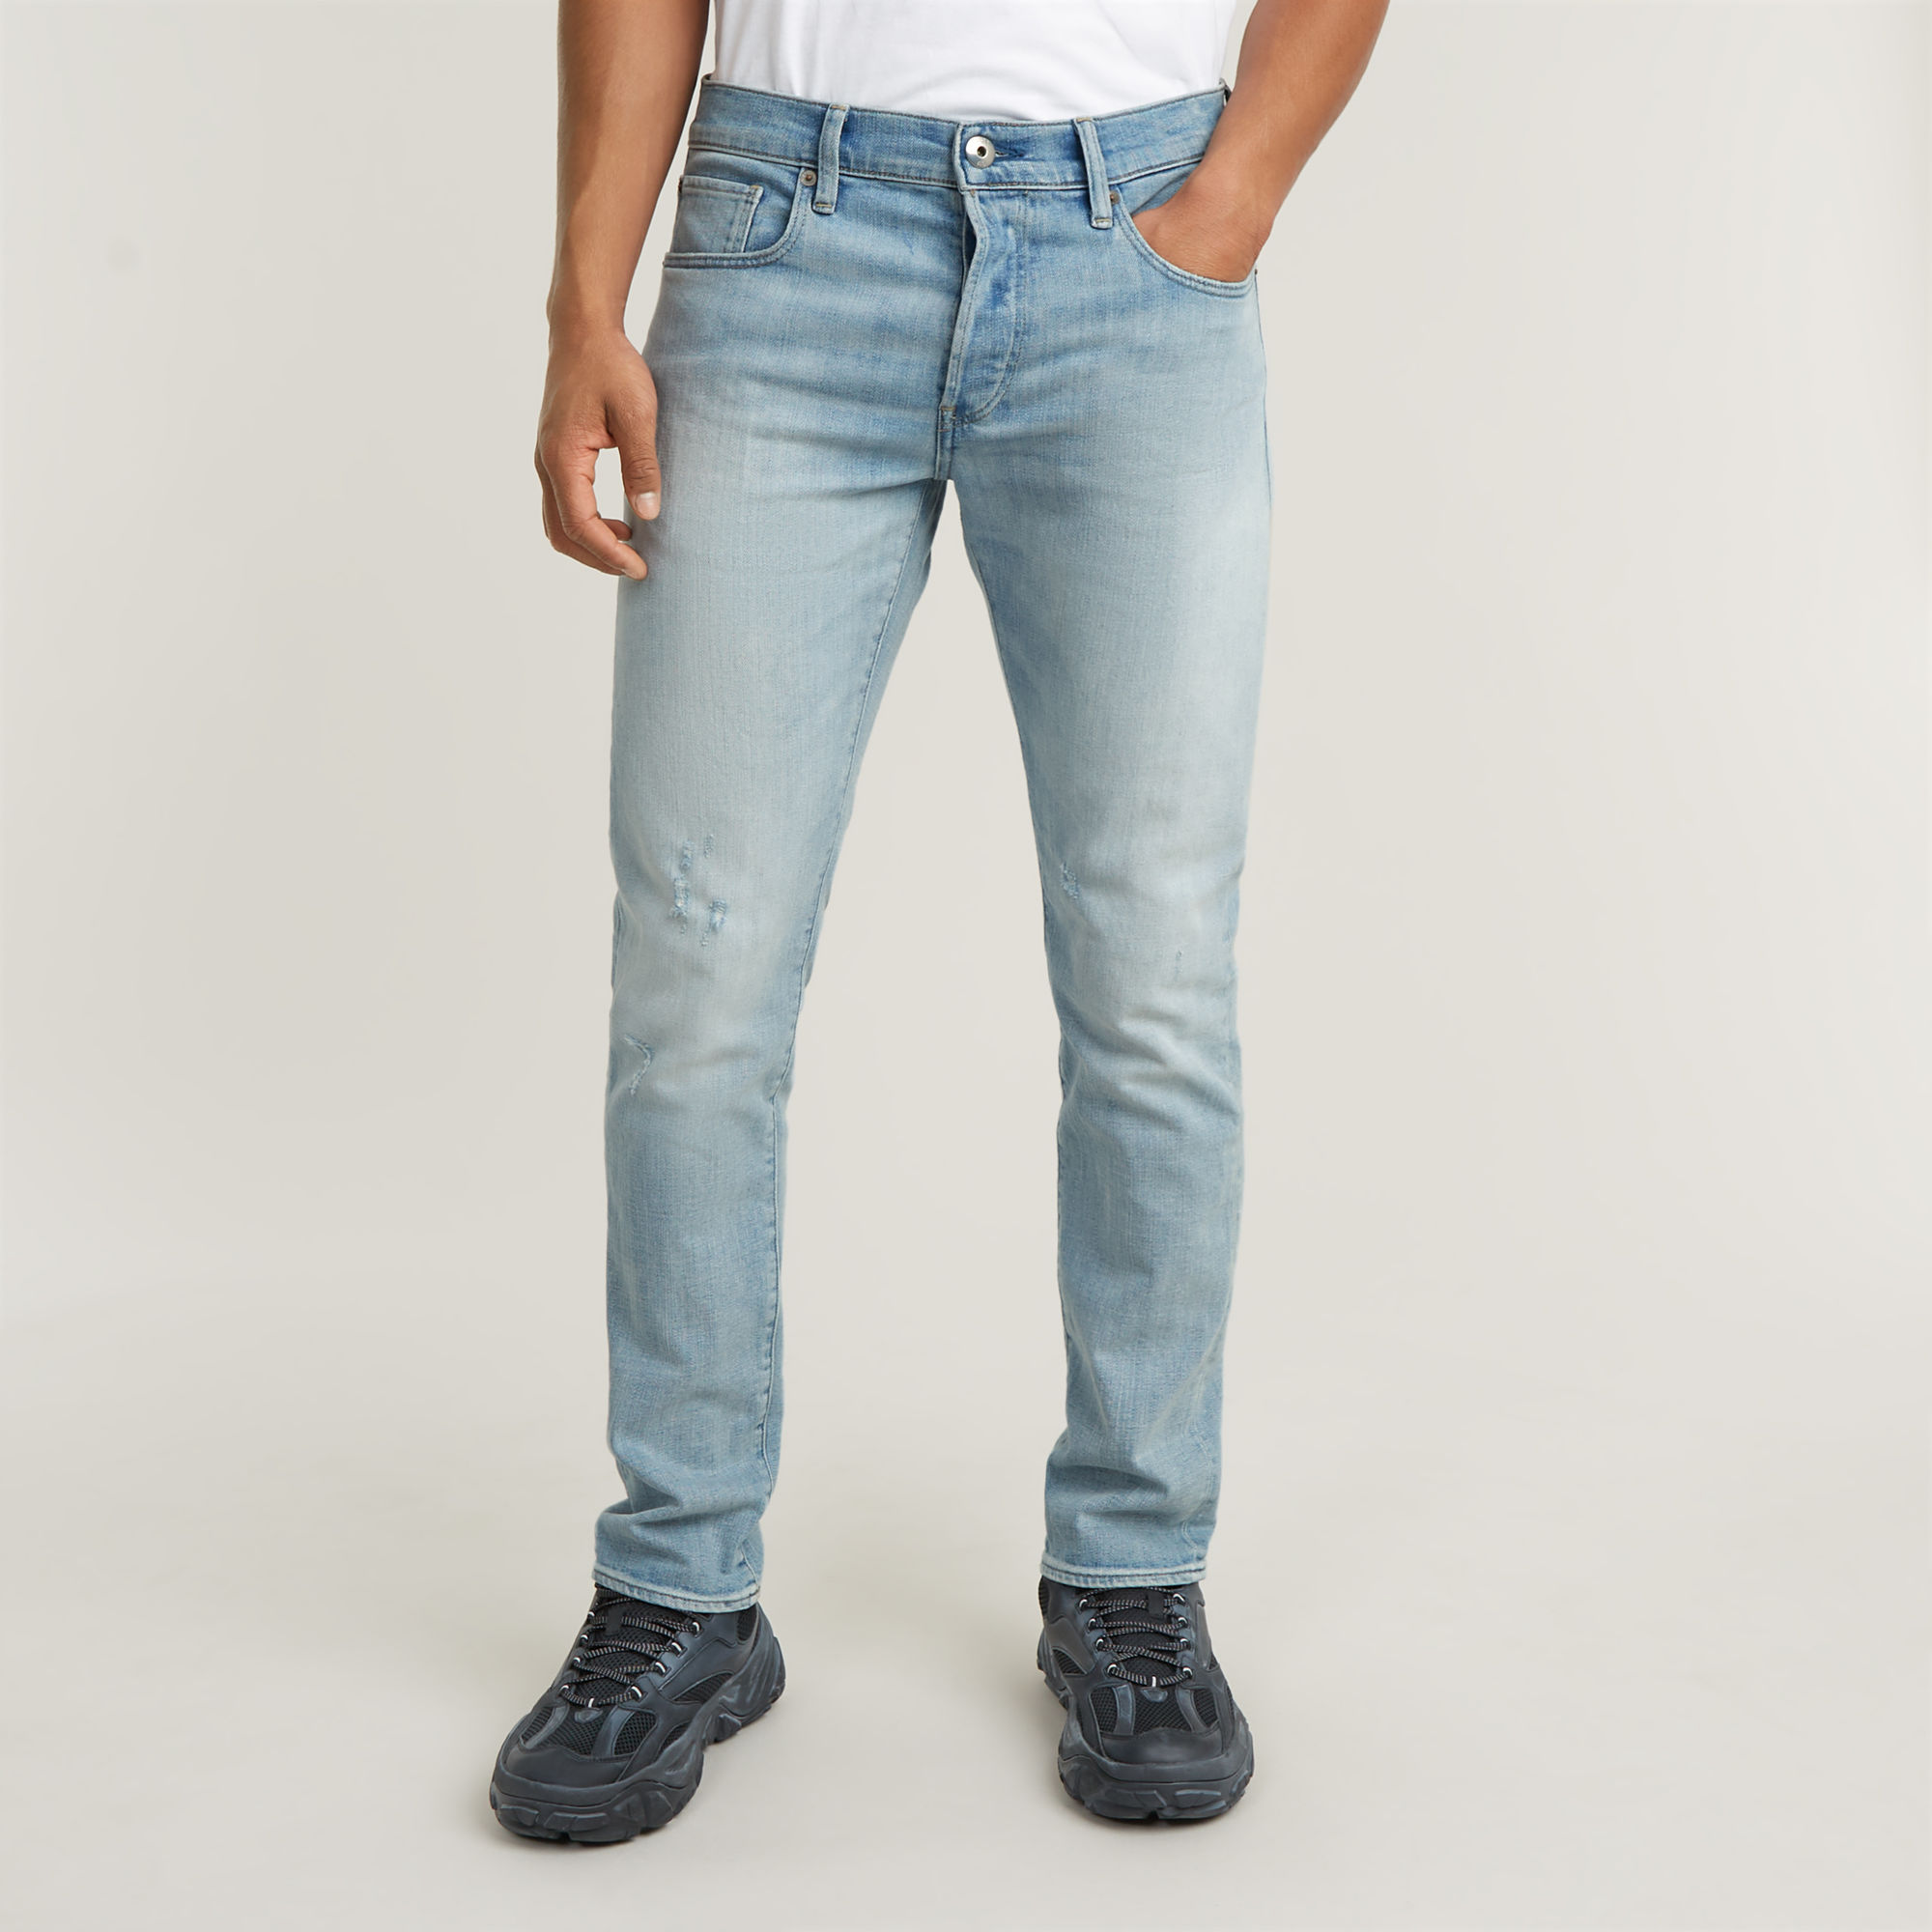 G-Star RAW 3301 slim fit jeans sun faded mirage blue